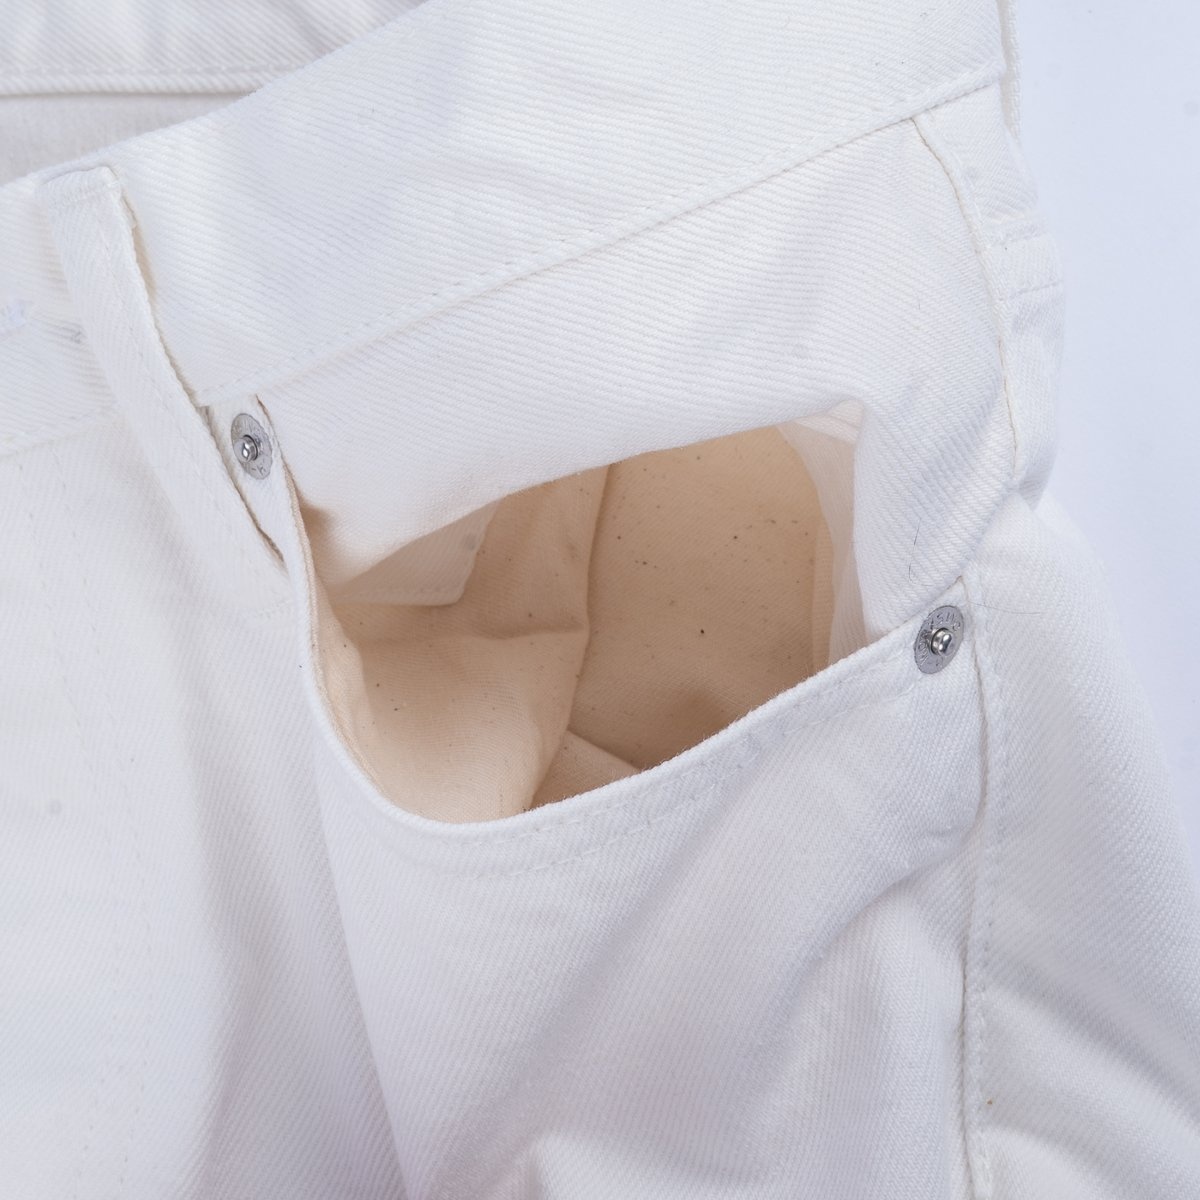 IH-888-WT 13.5oz Denim Medium/High Rise Tapered Cut Jeans - White - 12